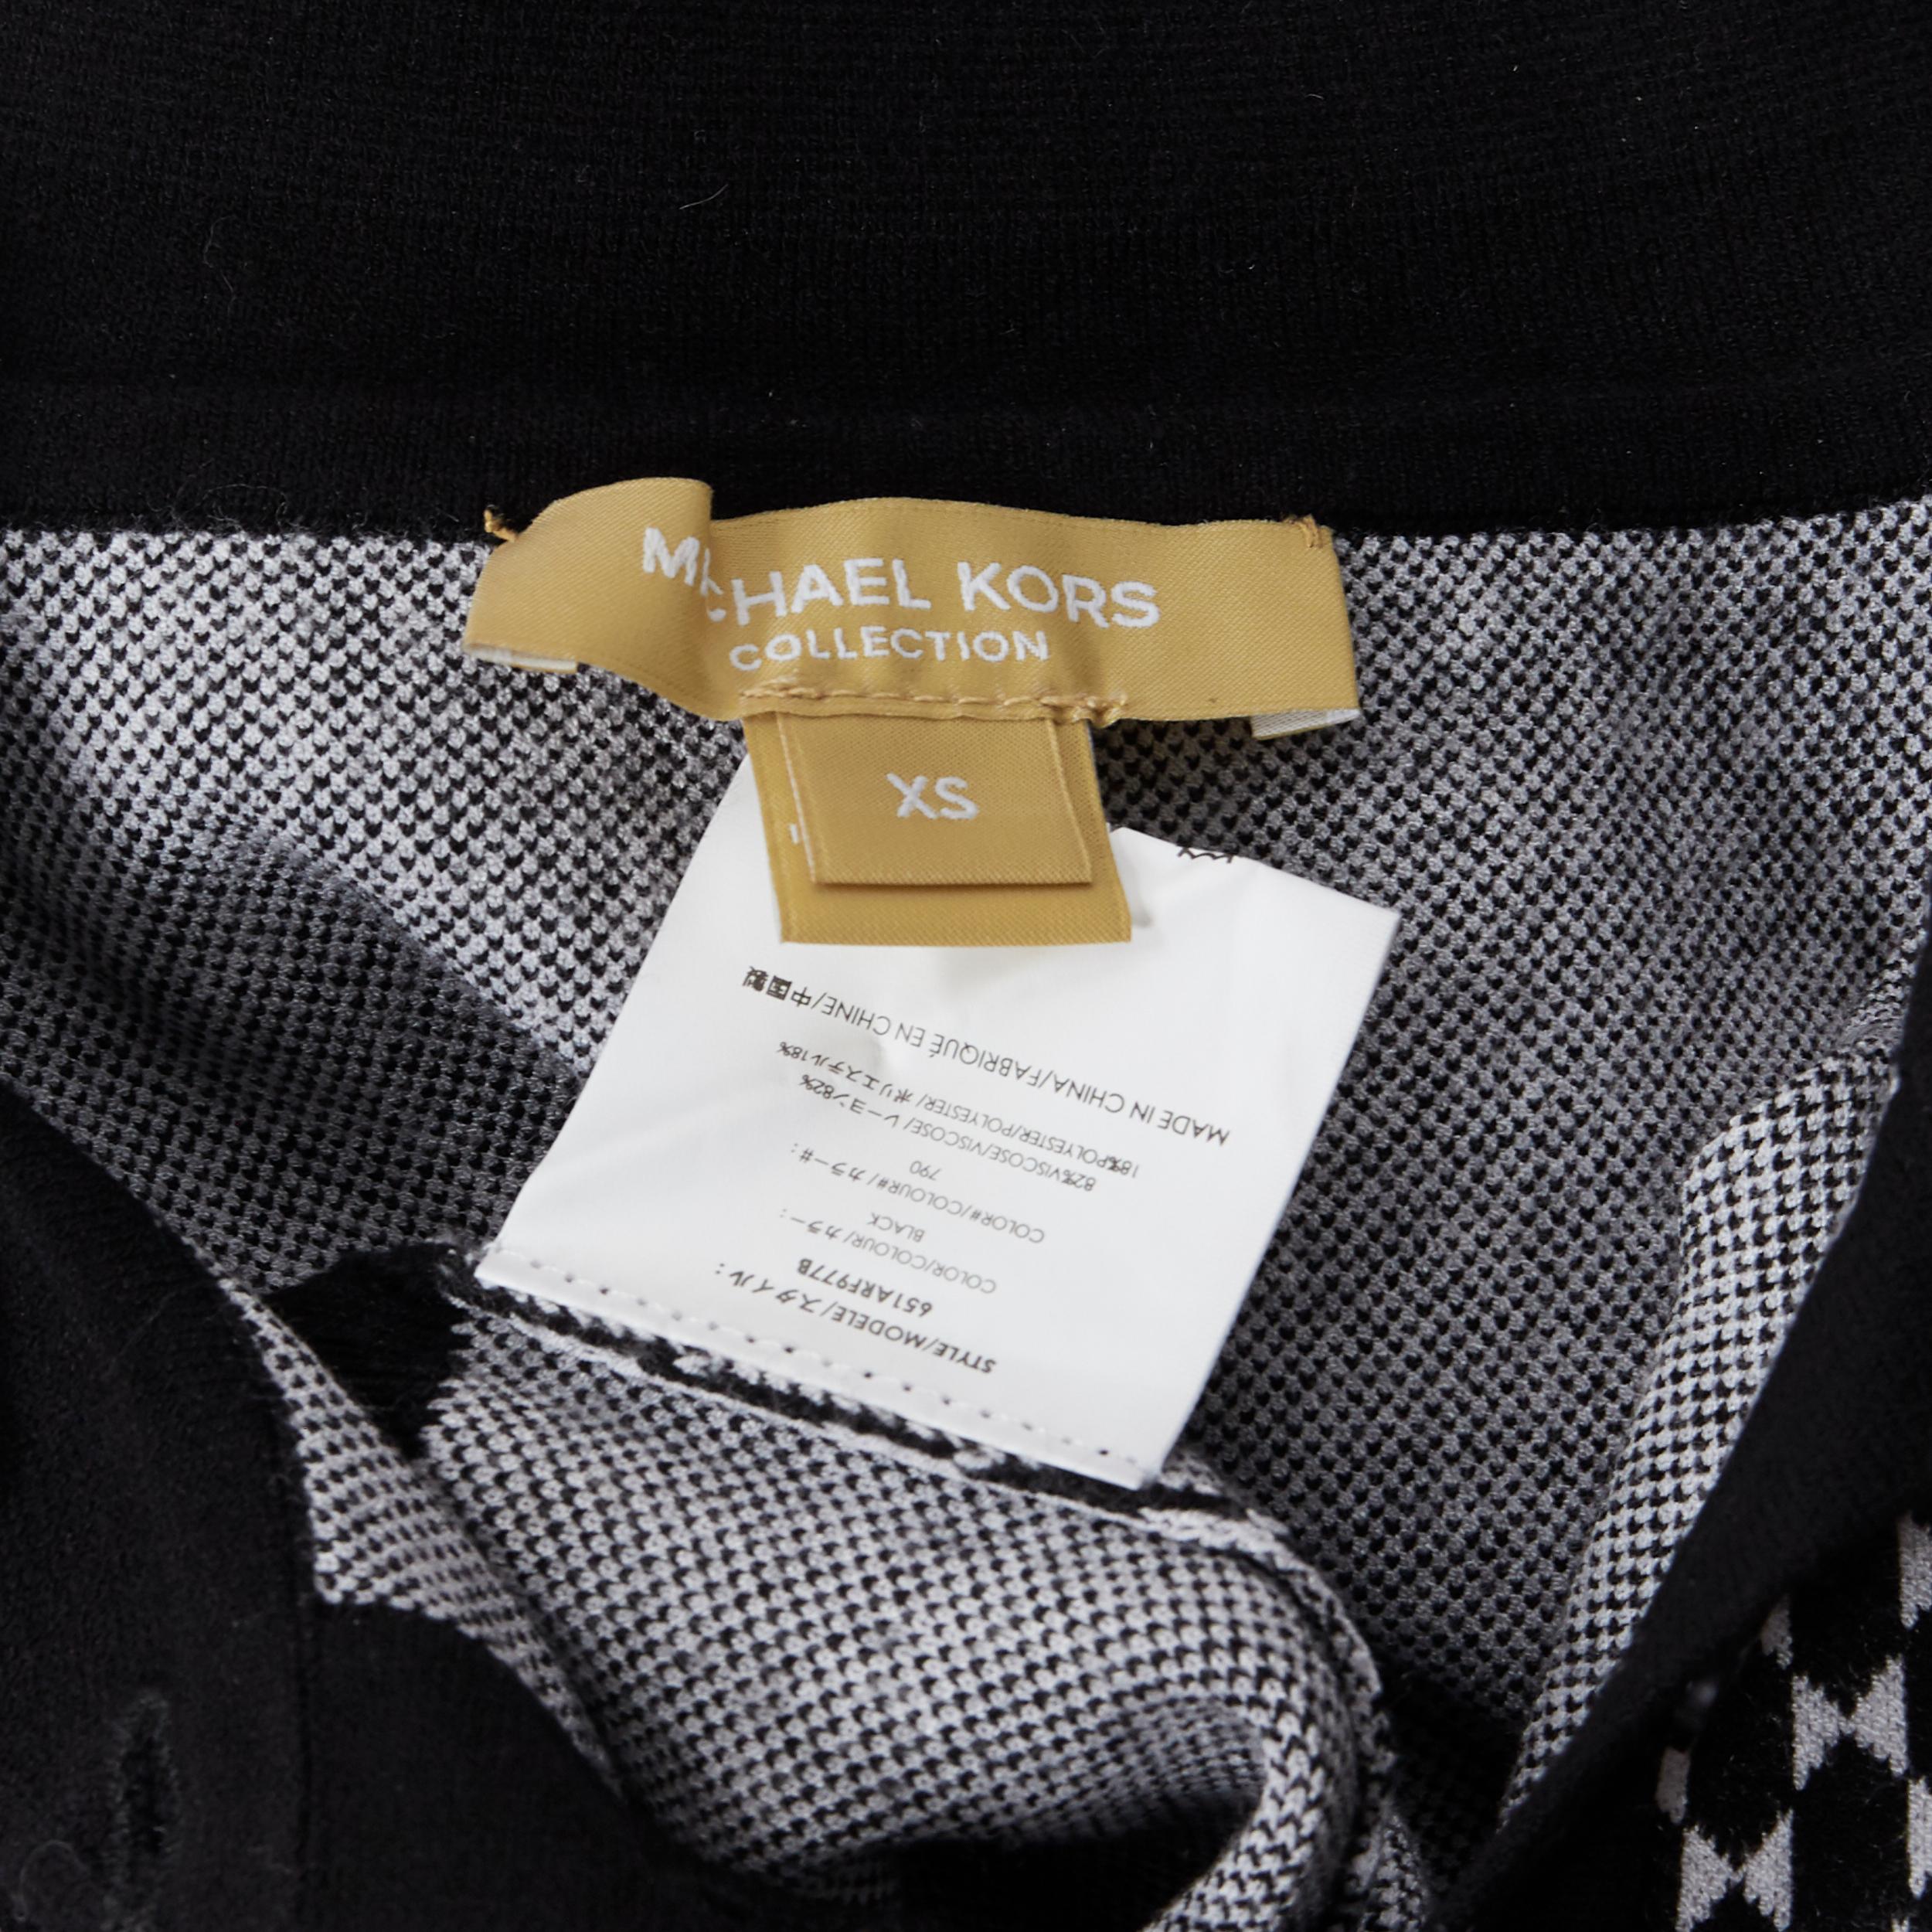 MICHAEL KORS COLLECTION black white geometric stretch knit polo shirt top XS 1